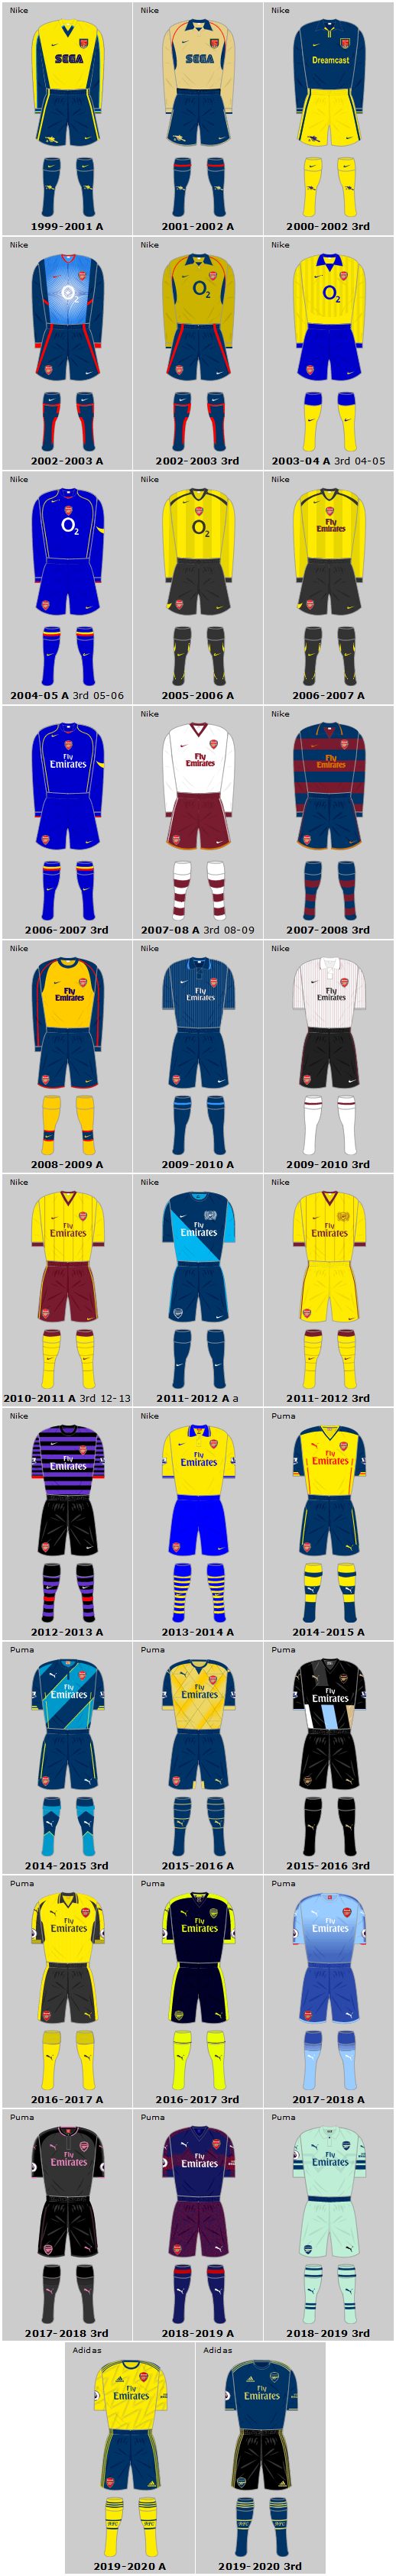 Arsenal FC 21st Century Away & Third Kits